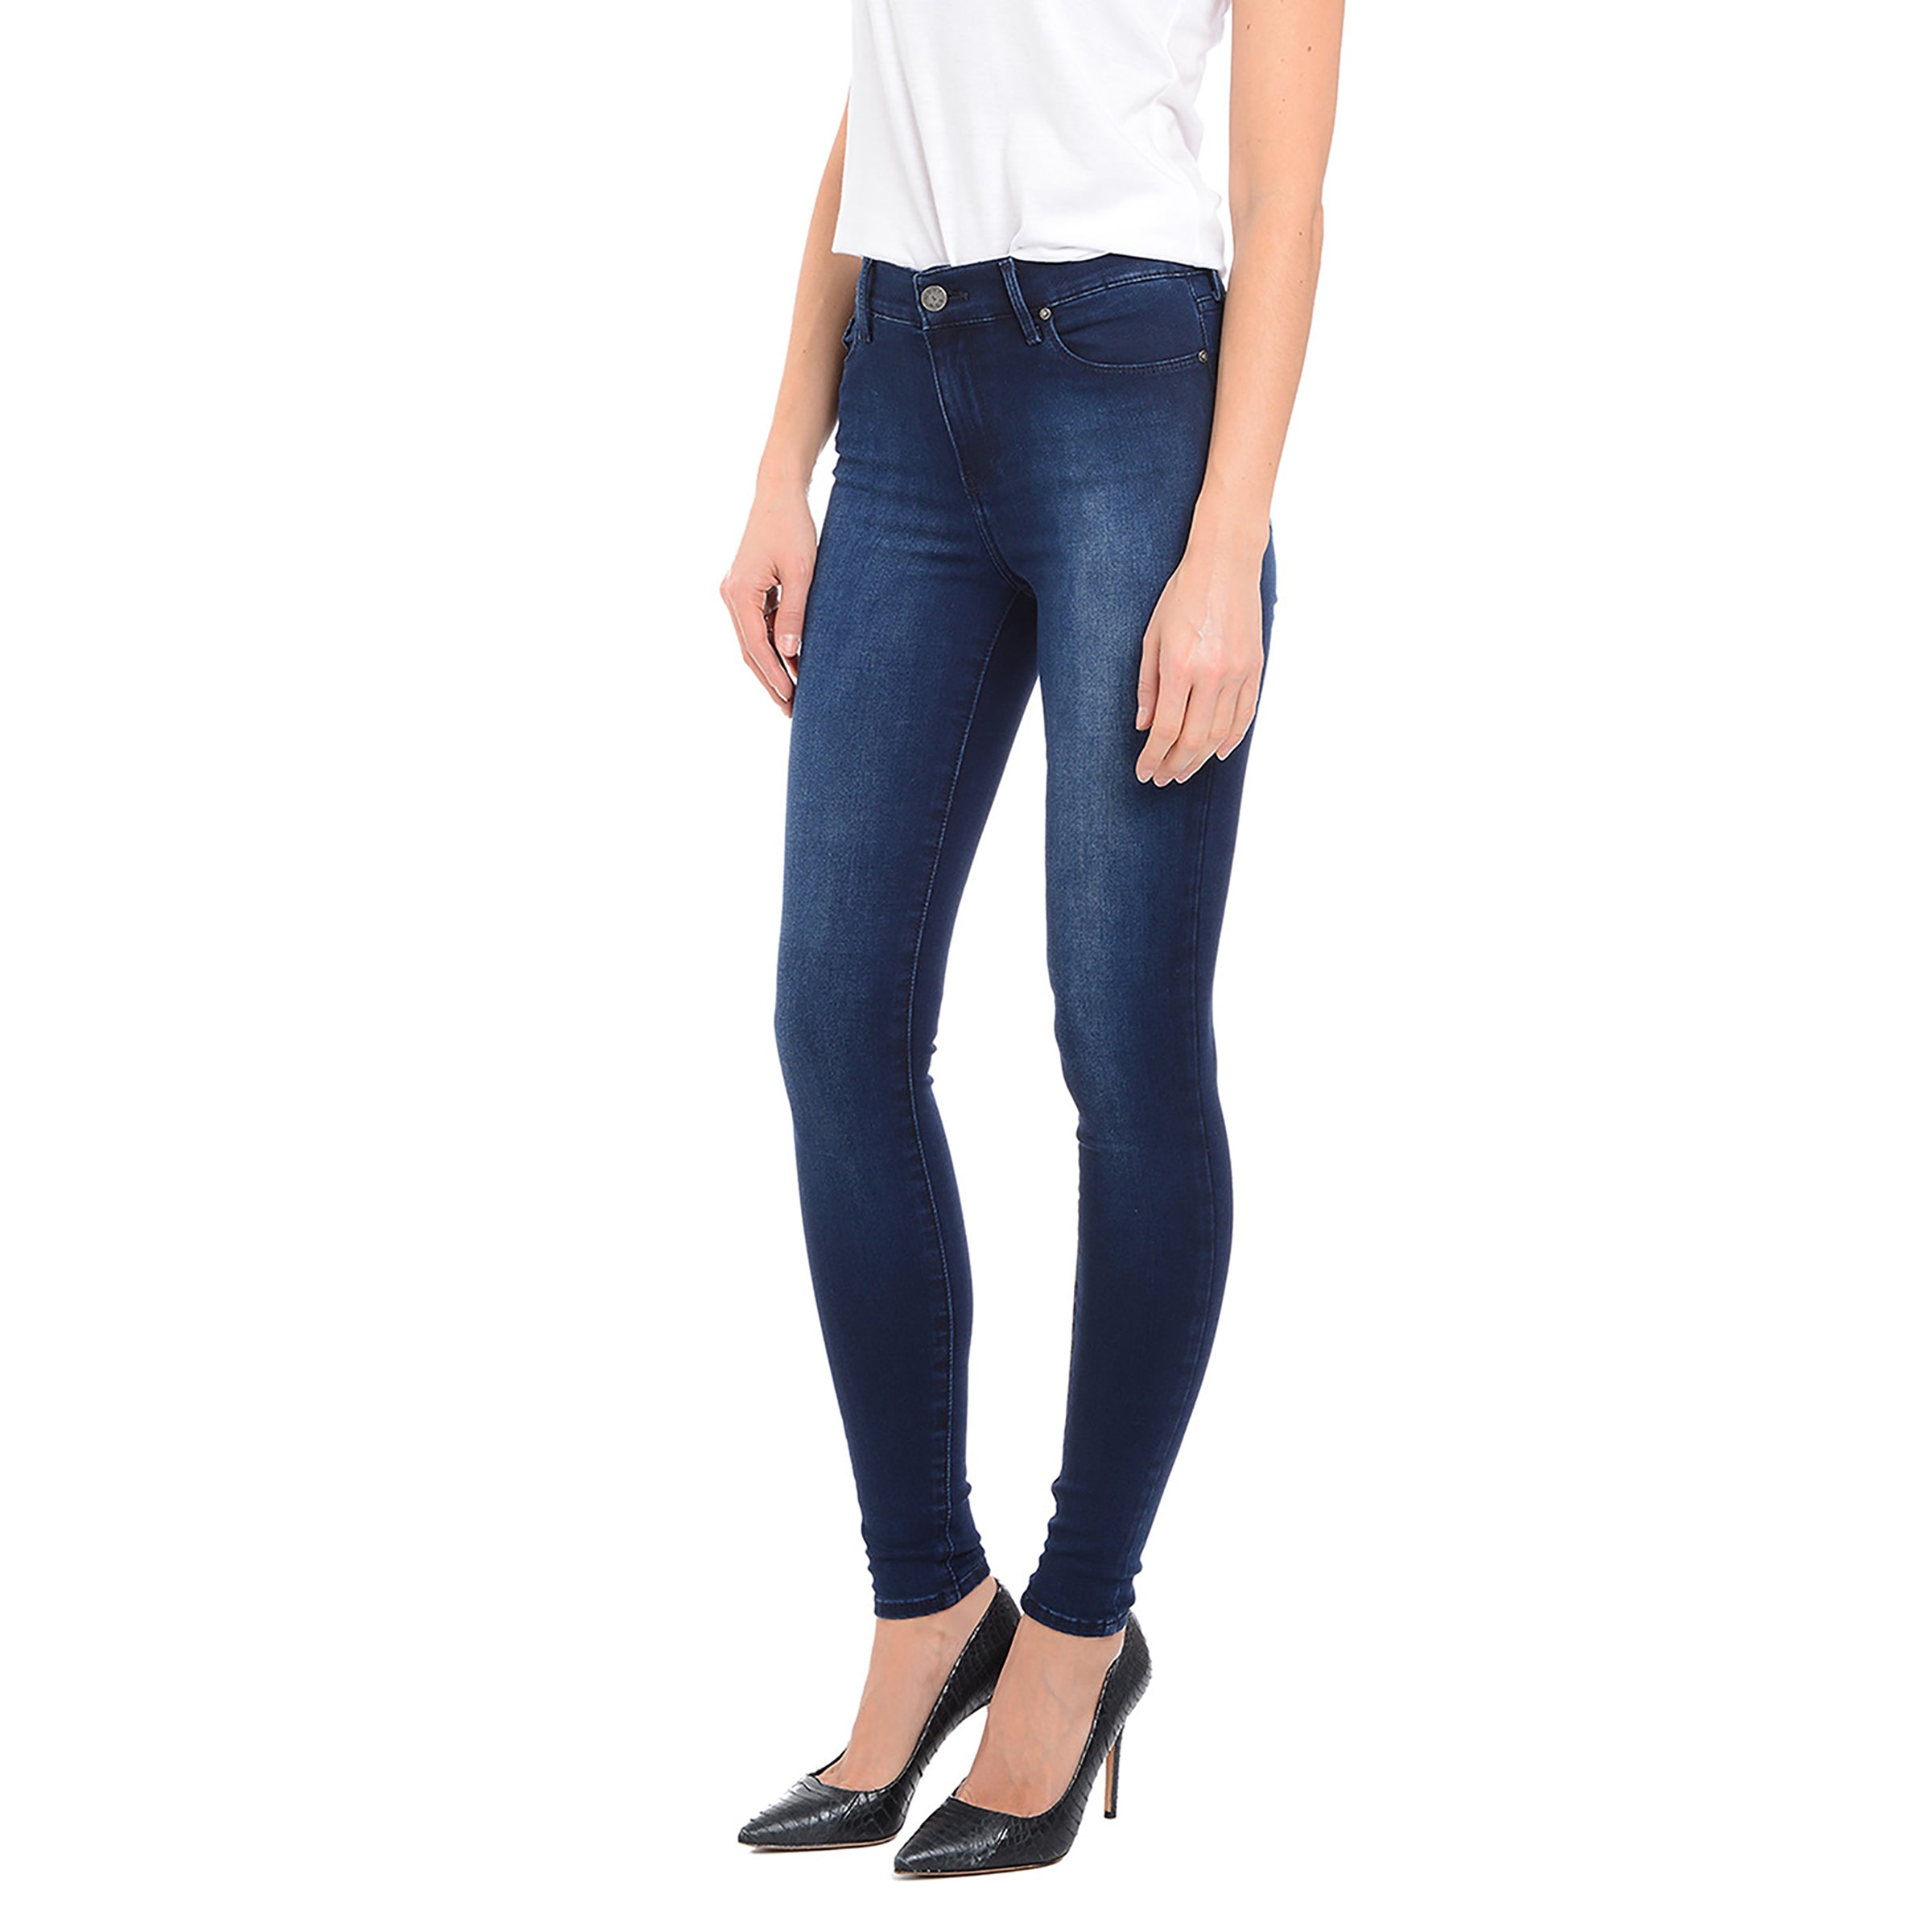 Women wearing Bleu  Médium/Foncé High Rise Skinny Ann Jeans